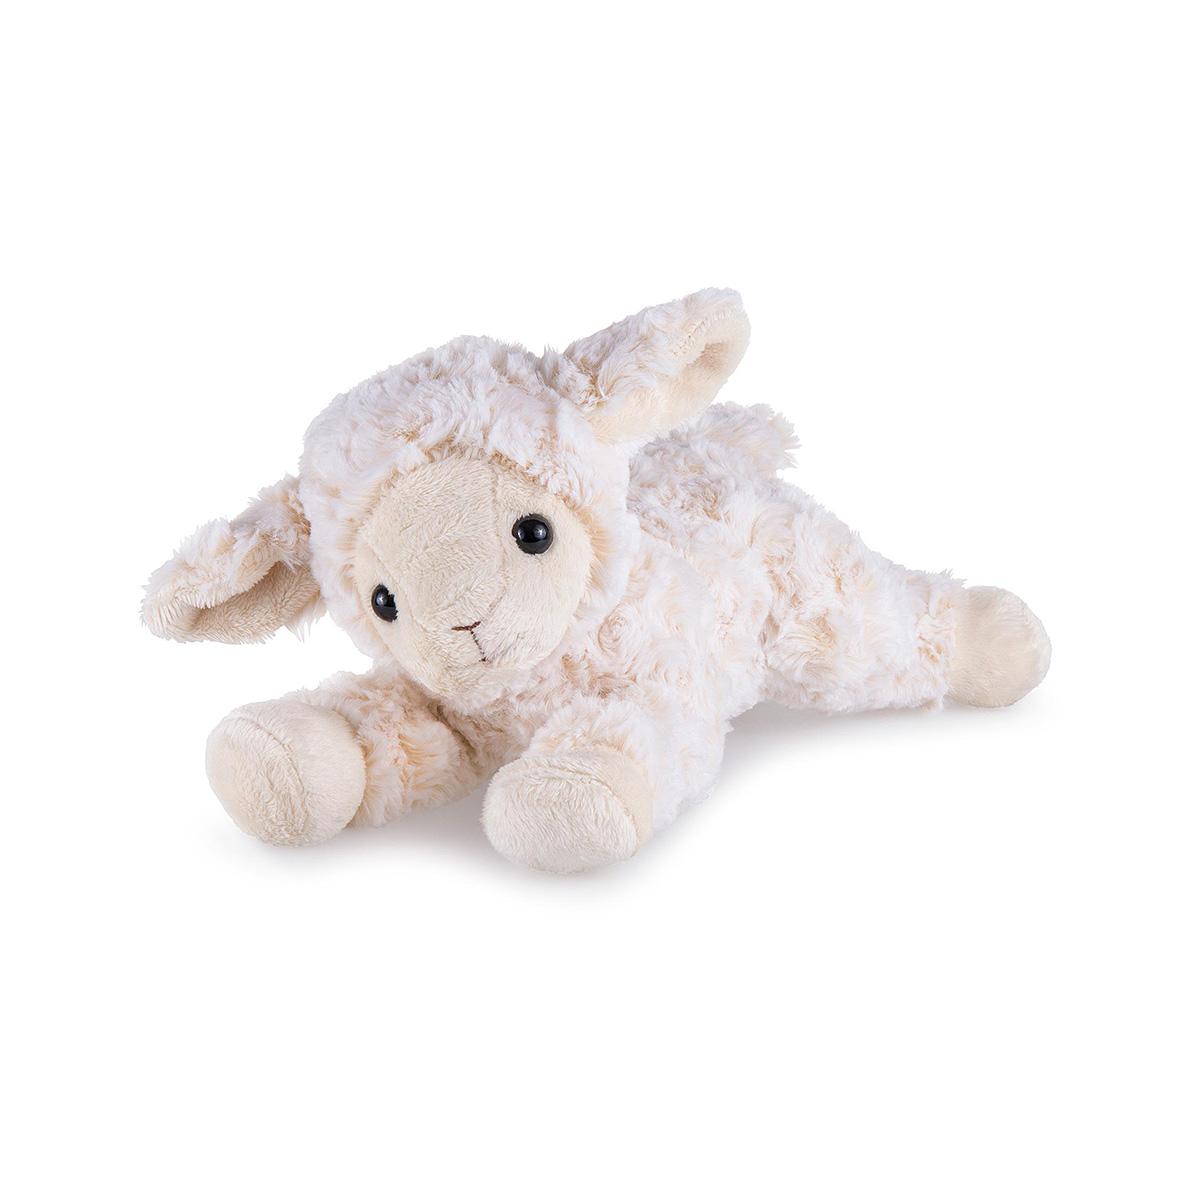 lamb stuffed animal dog toy